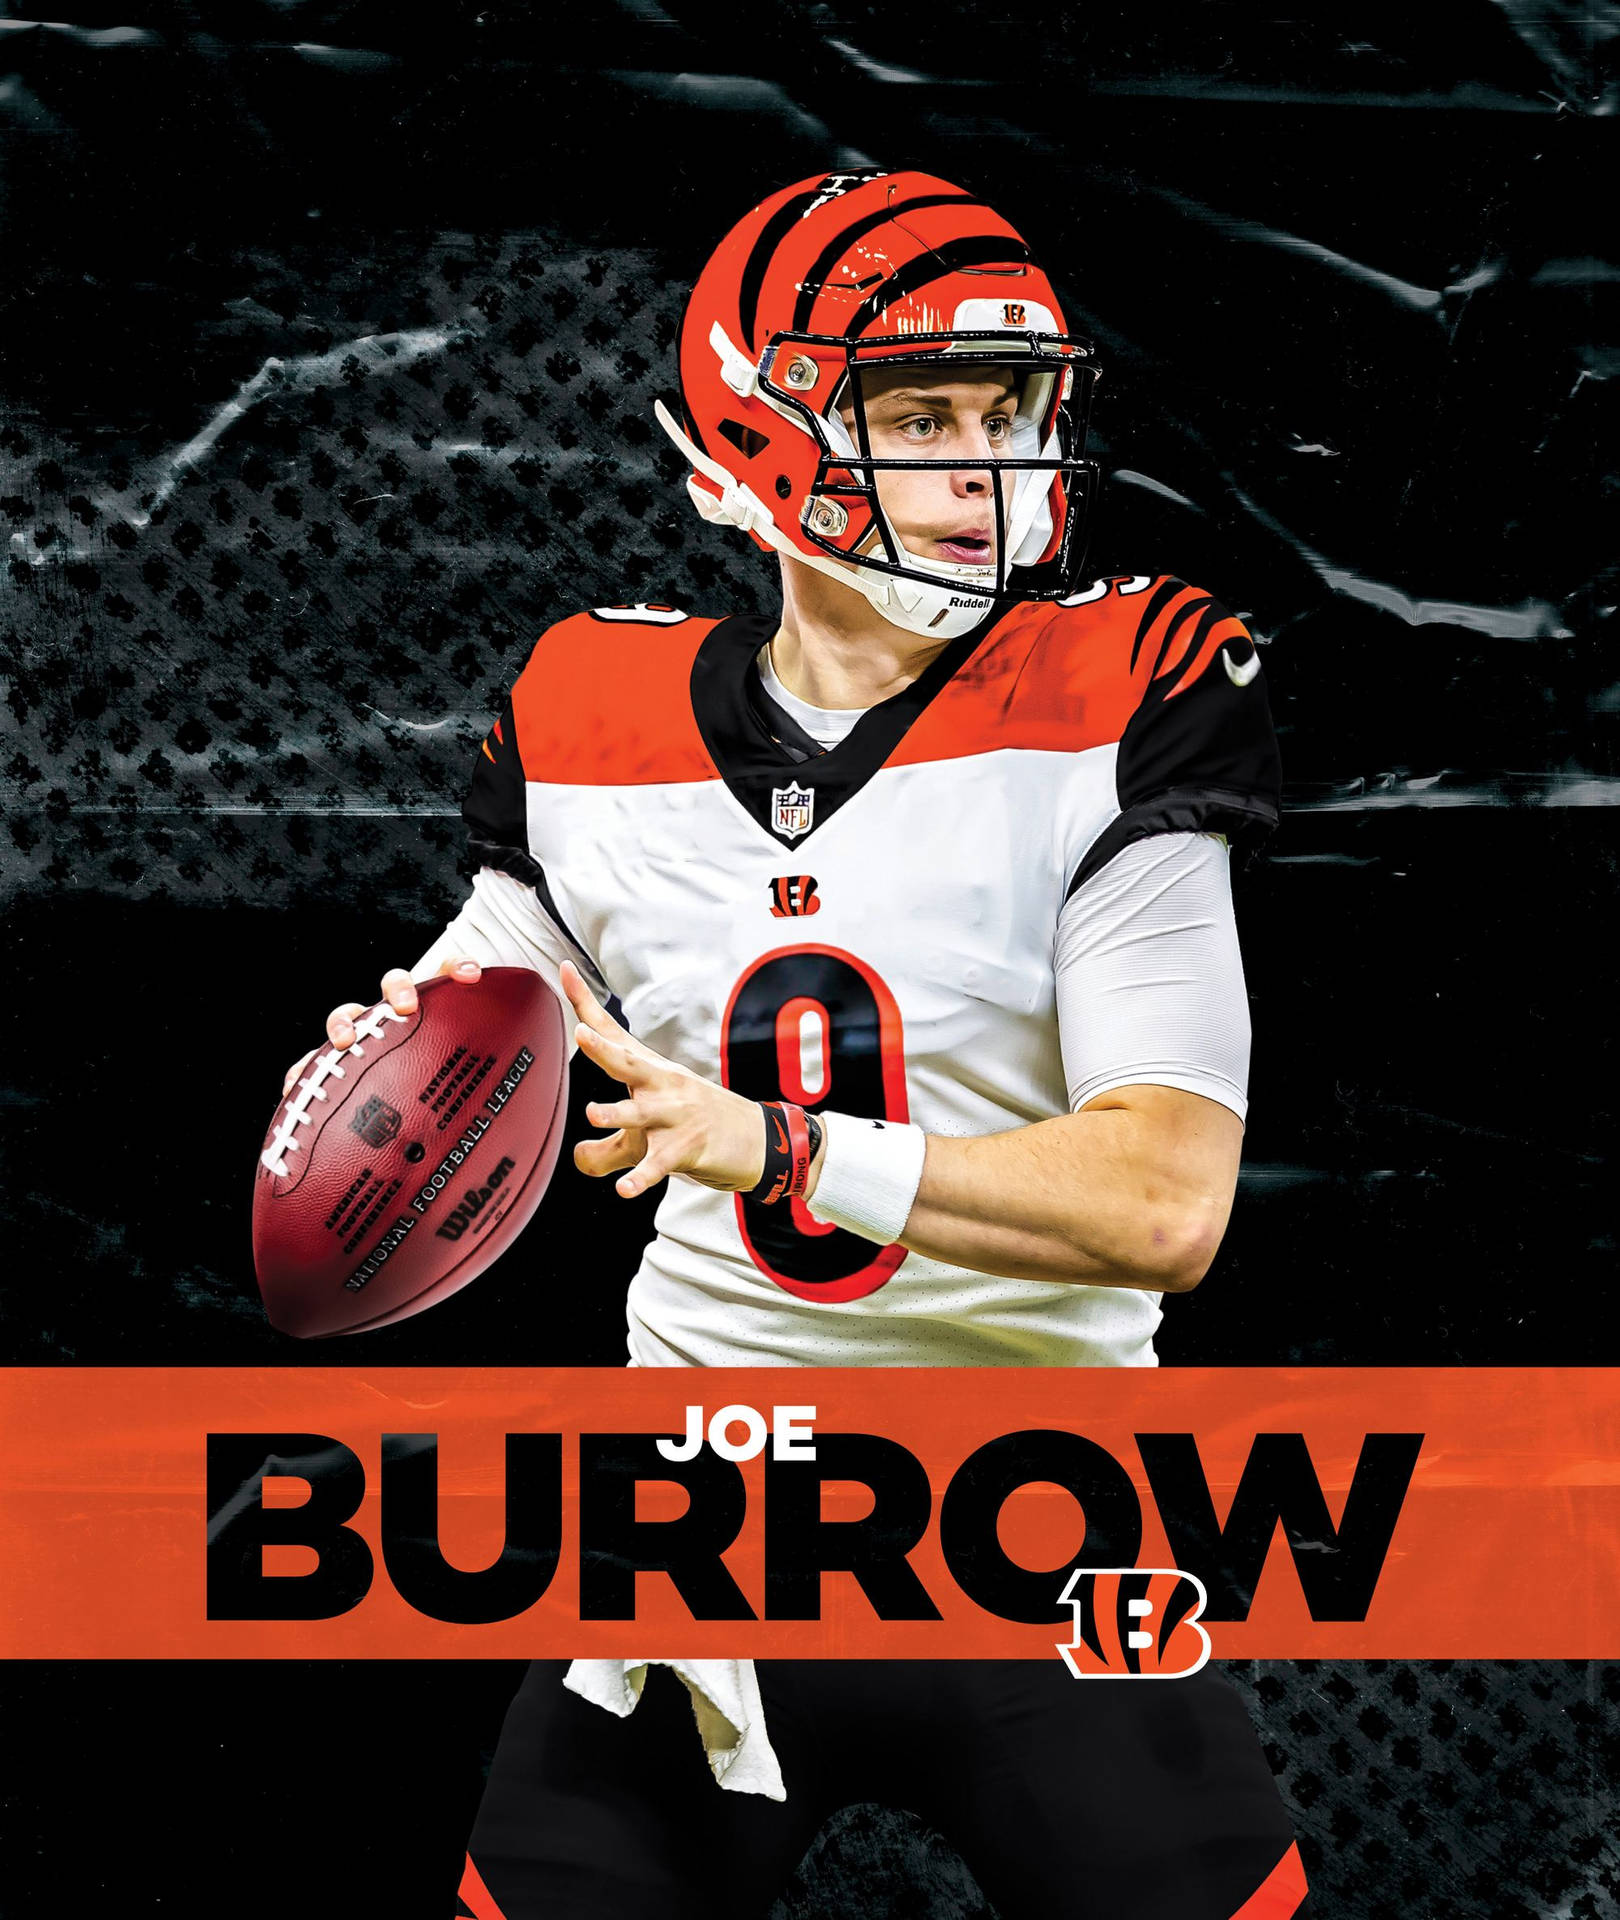 Joe Burrow Poster Background